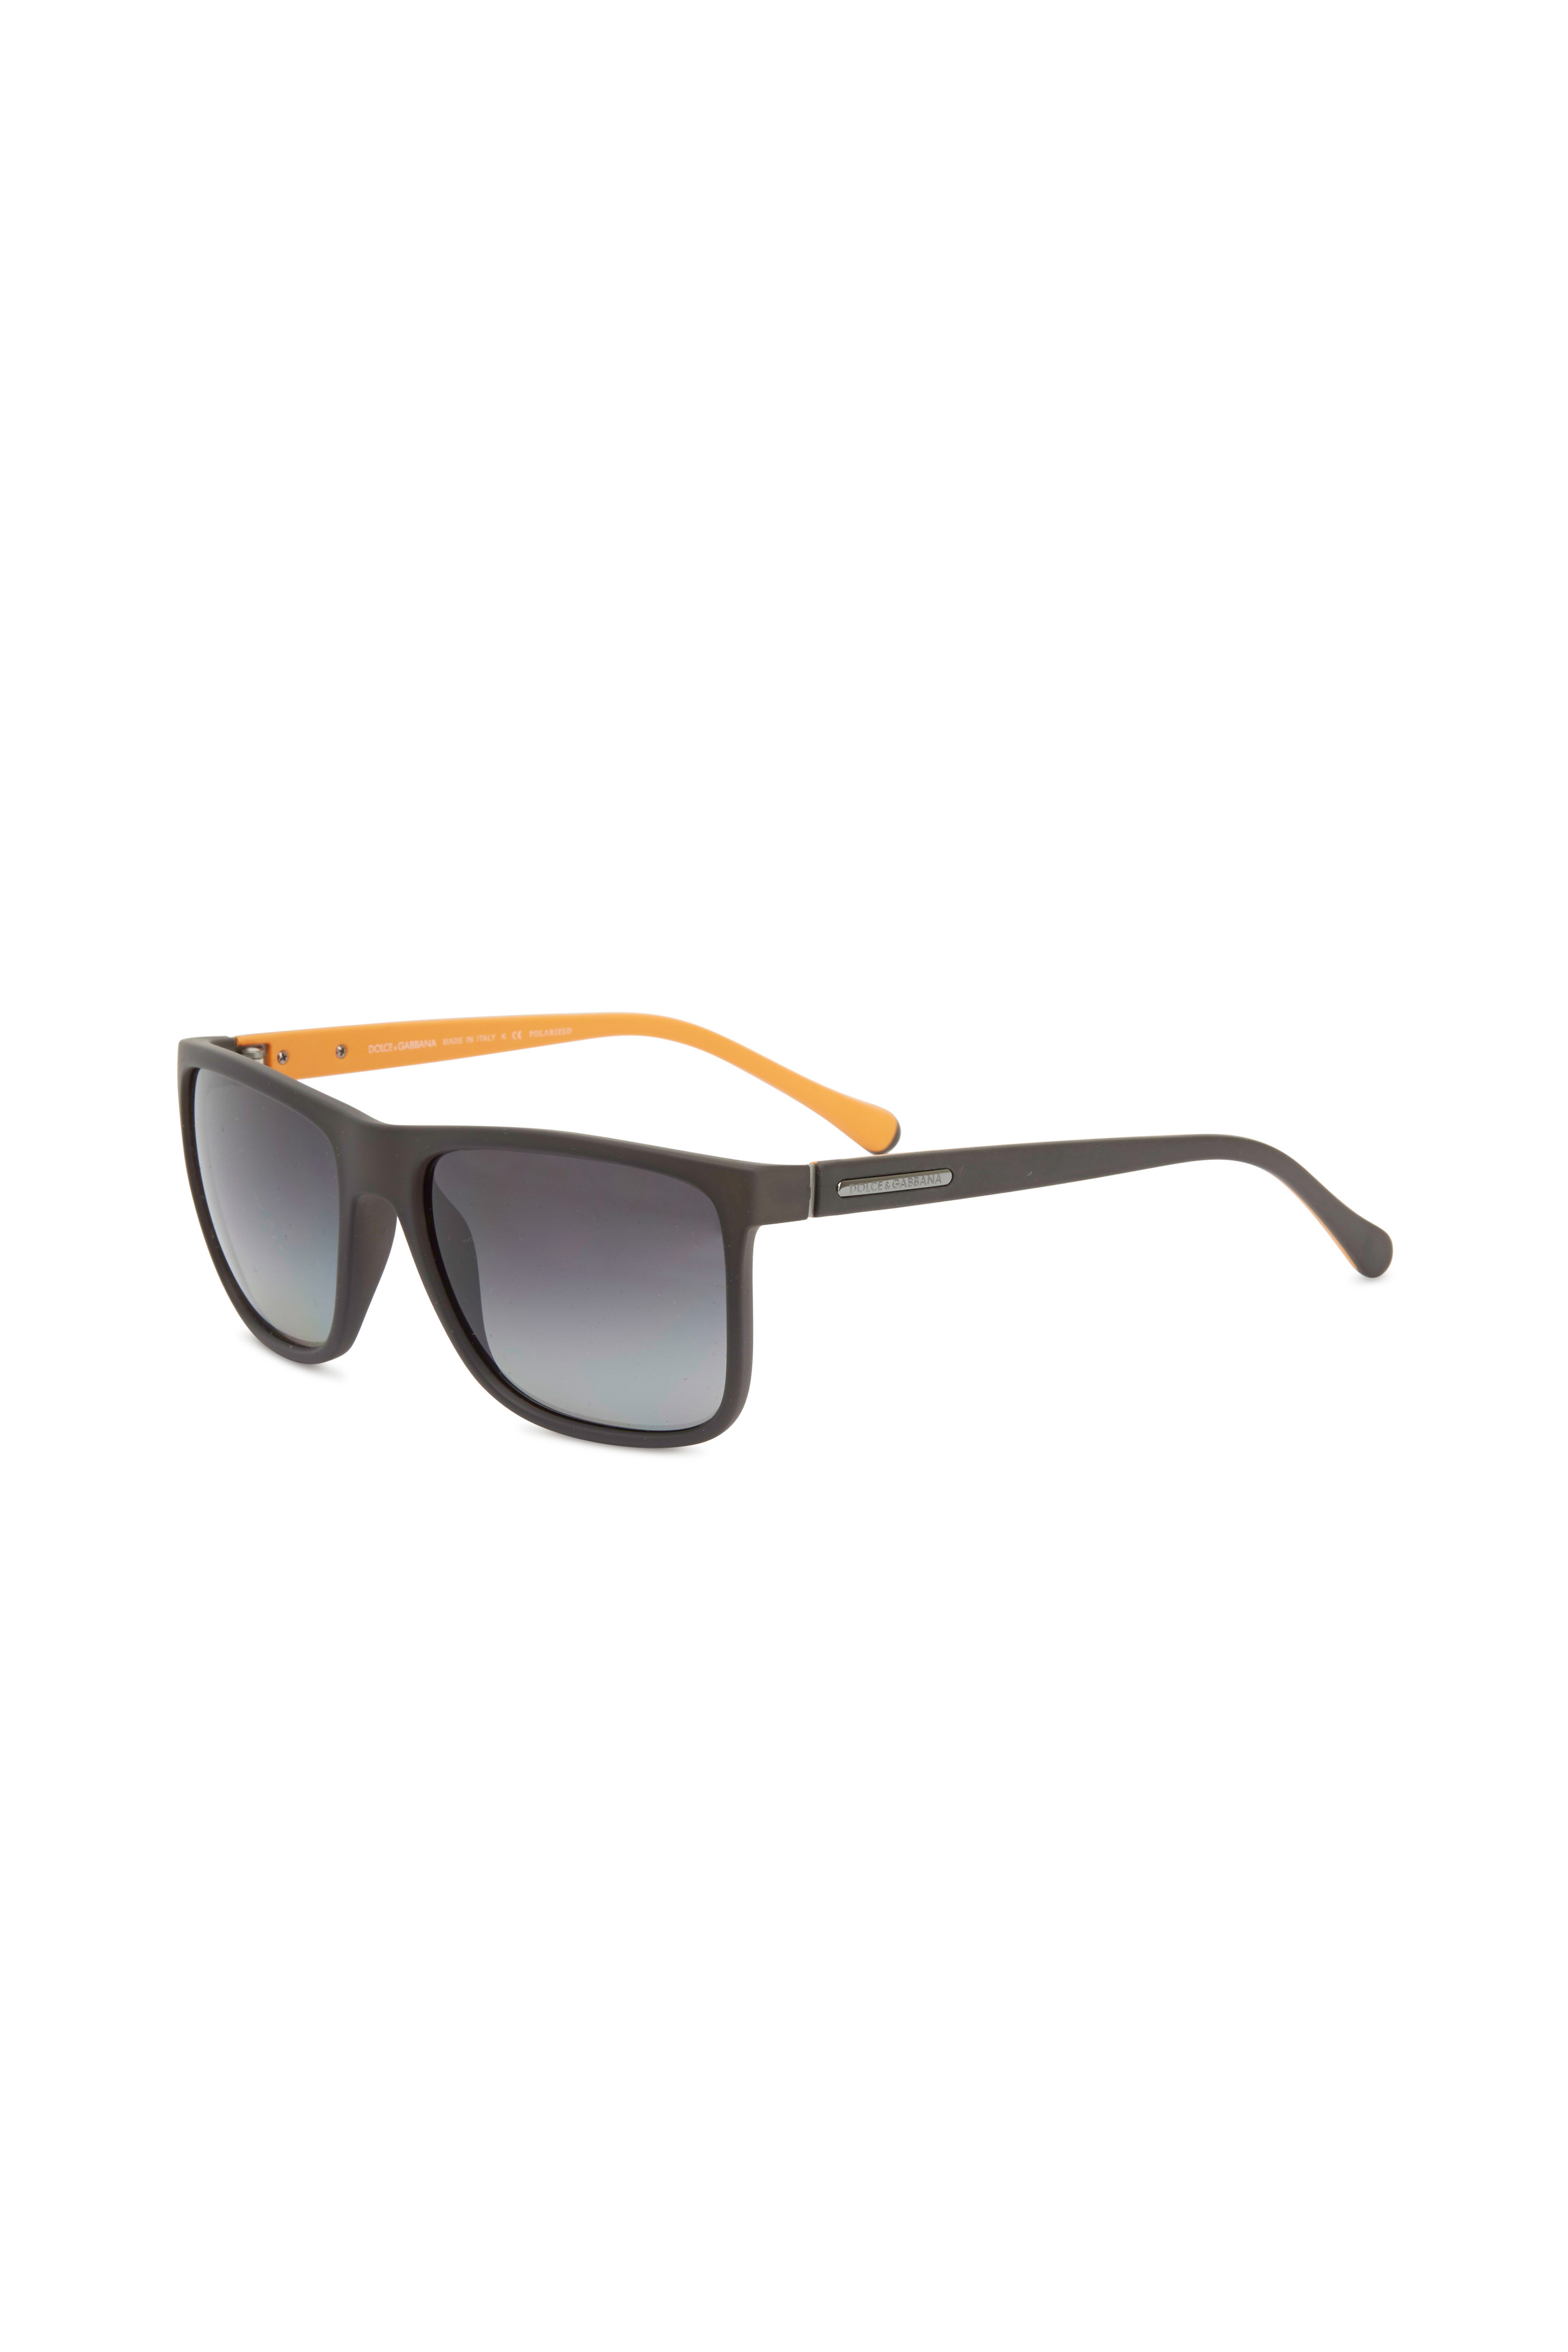 dolce and gabbana orange sunglasses